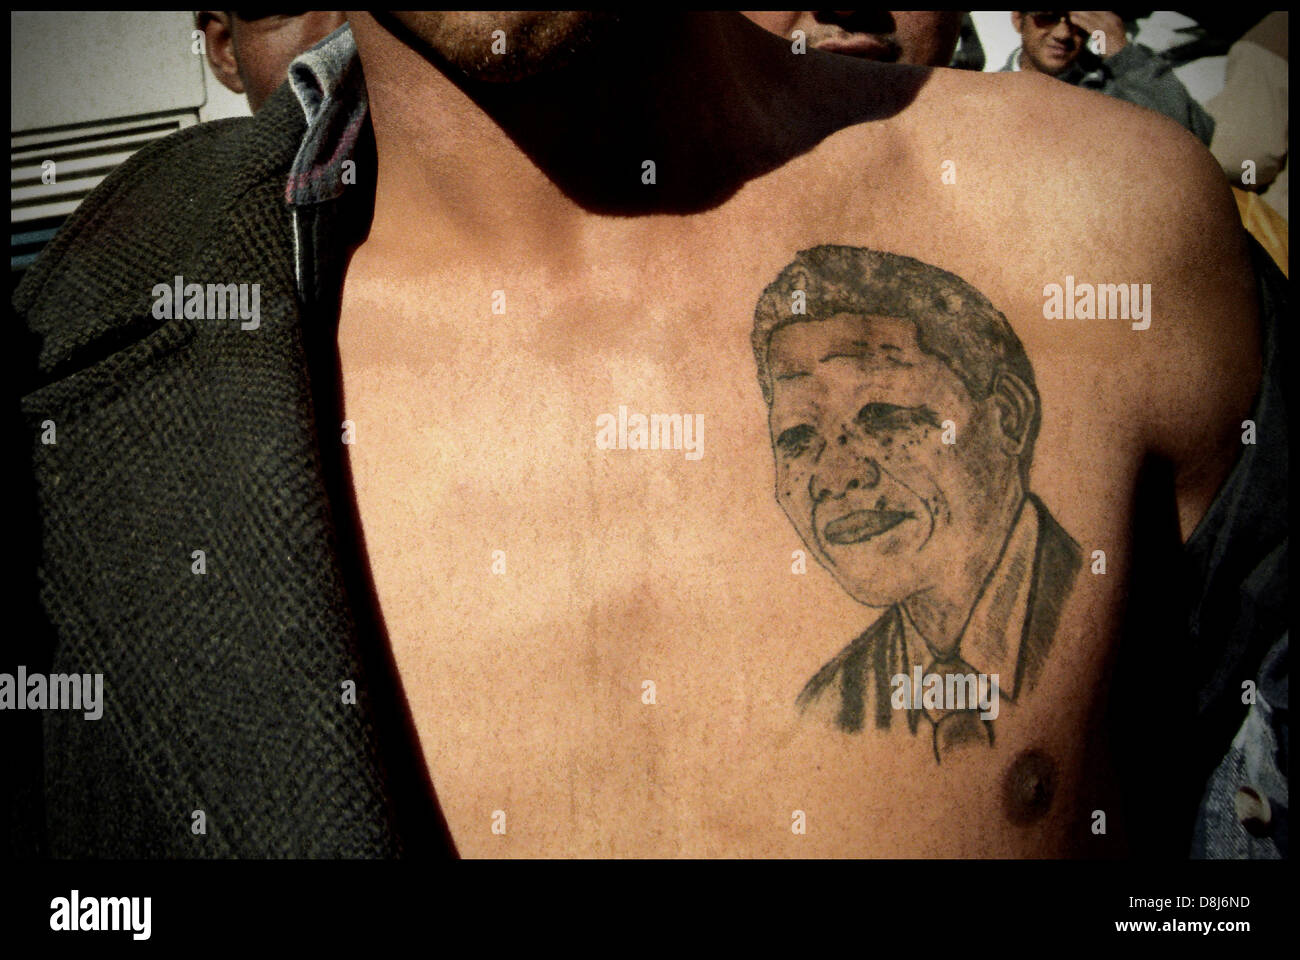 9. Nelson Mandela Tattoo Designs - wide 4